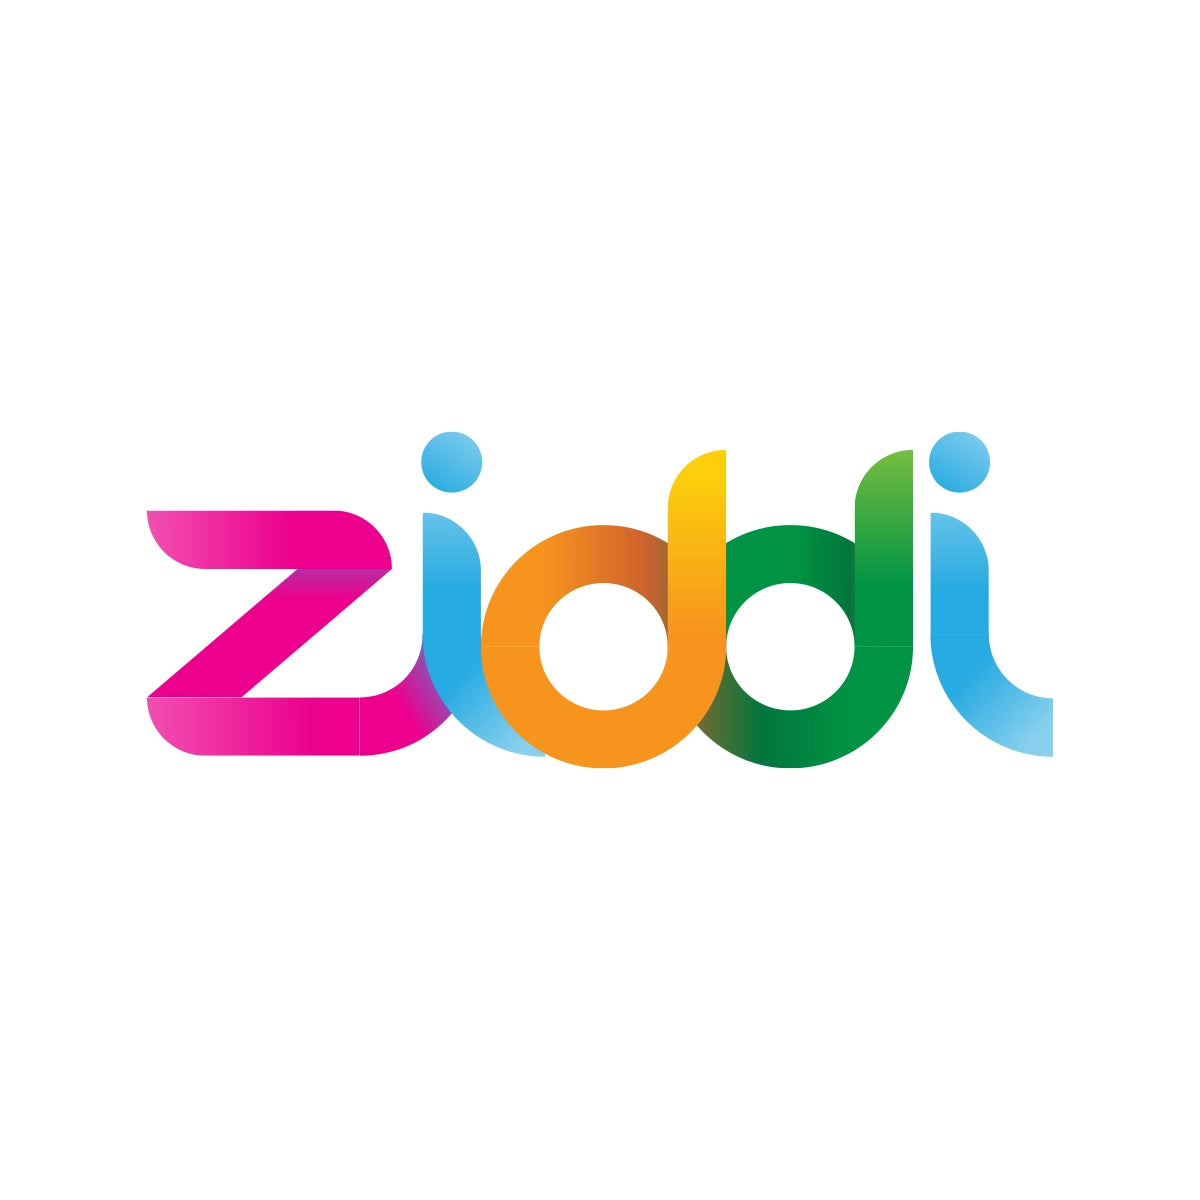 ziddi.org